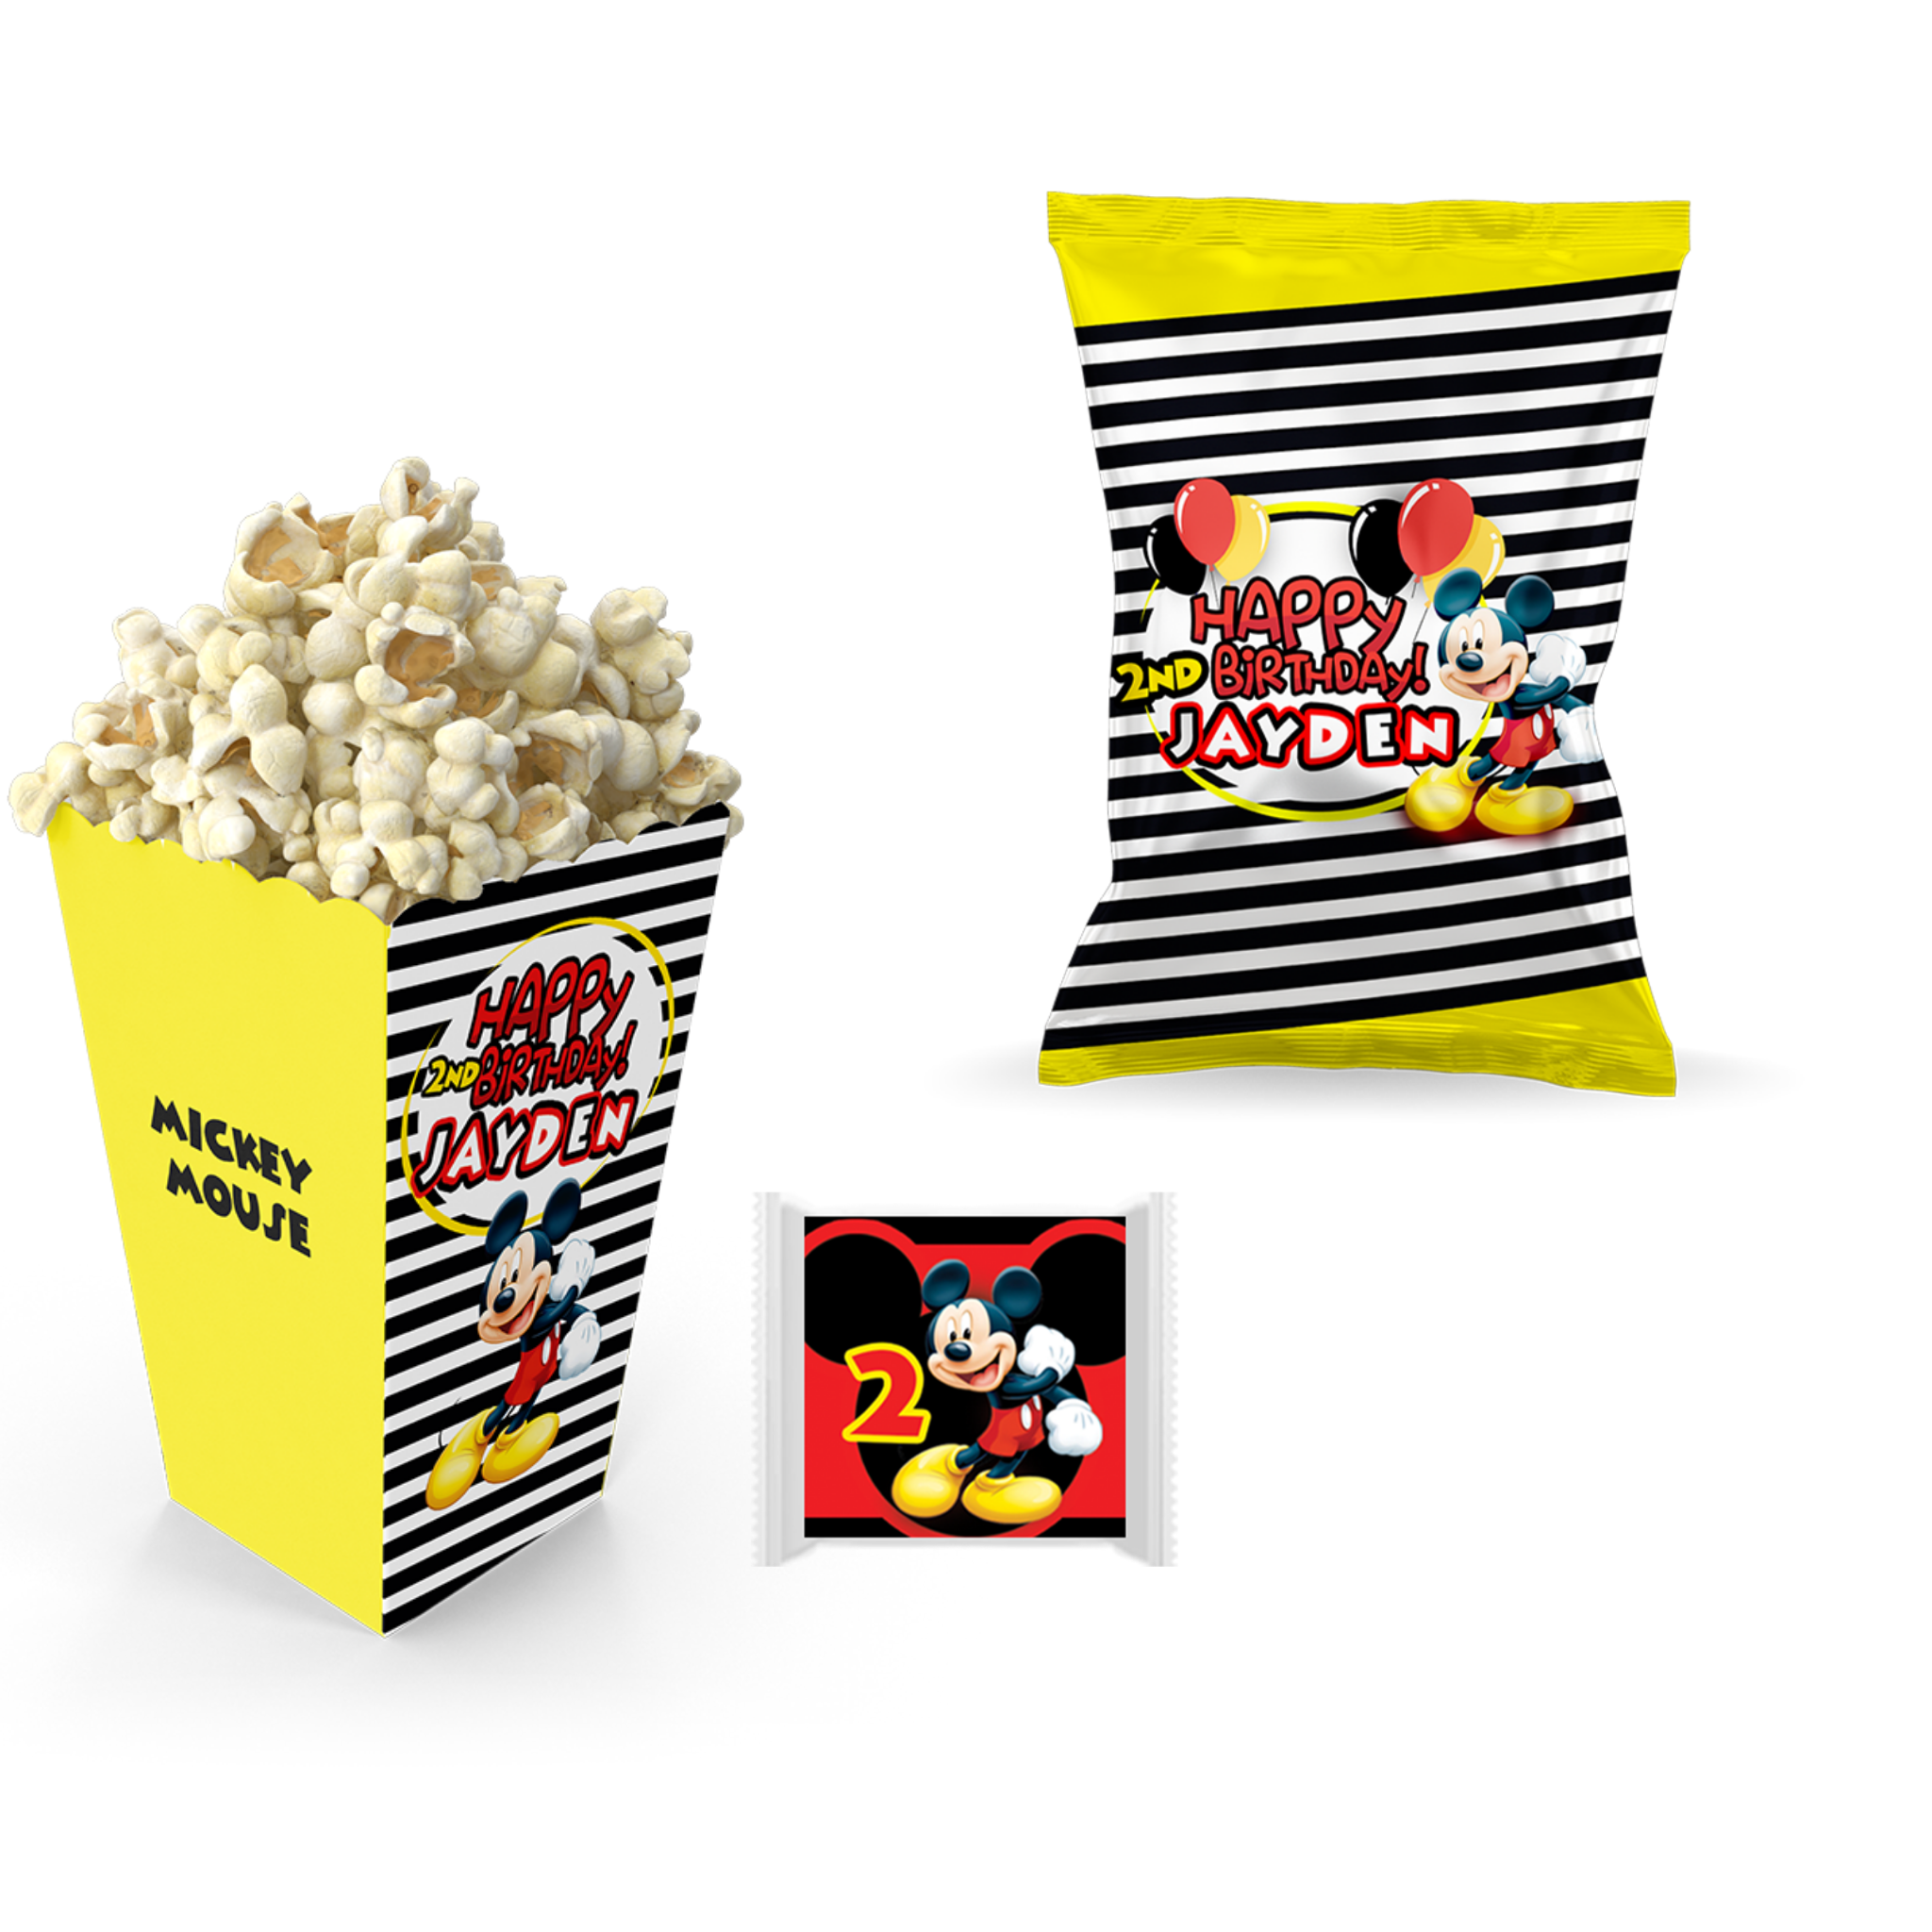 Mickey Mouse  popcornbak, chips en chocolade